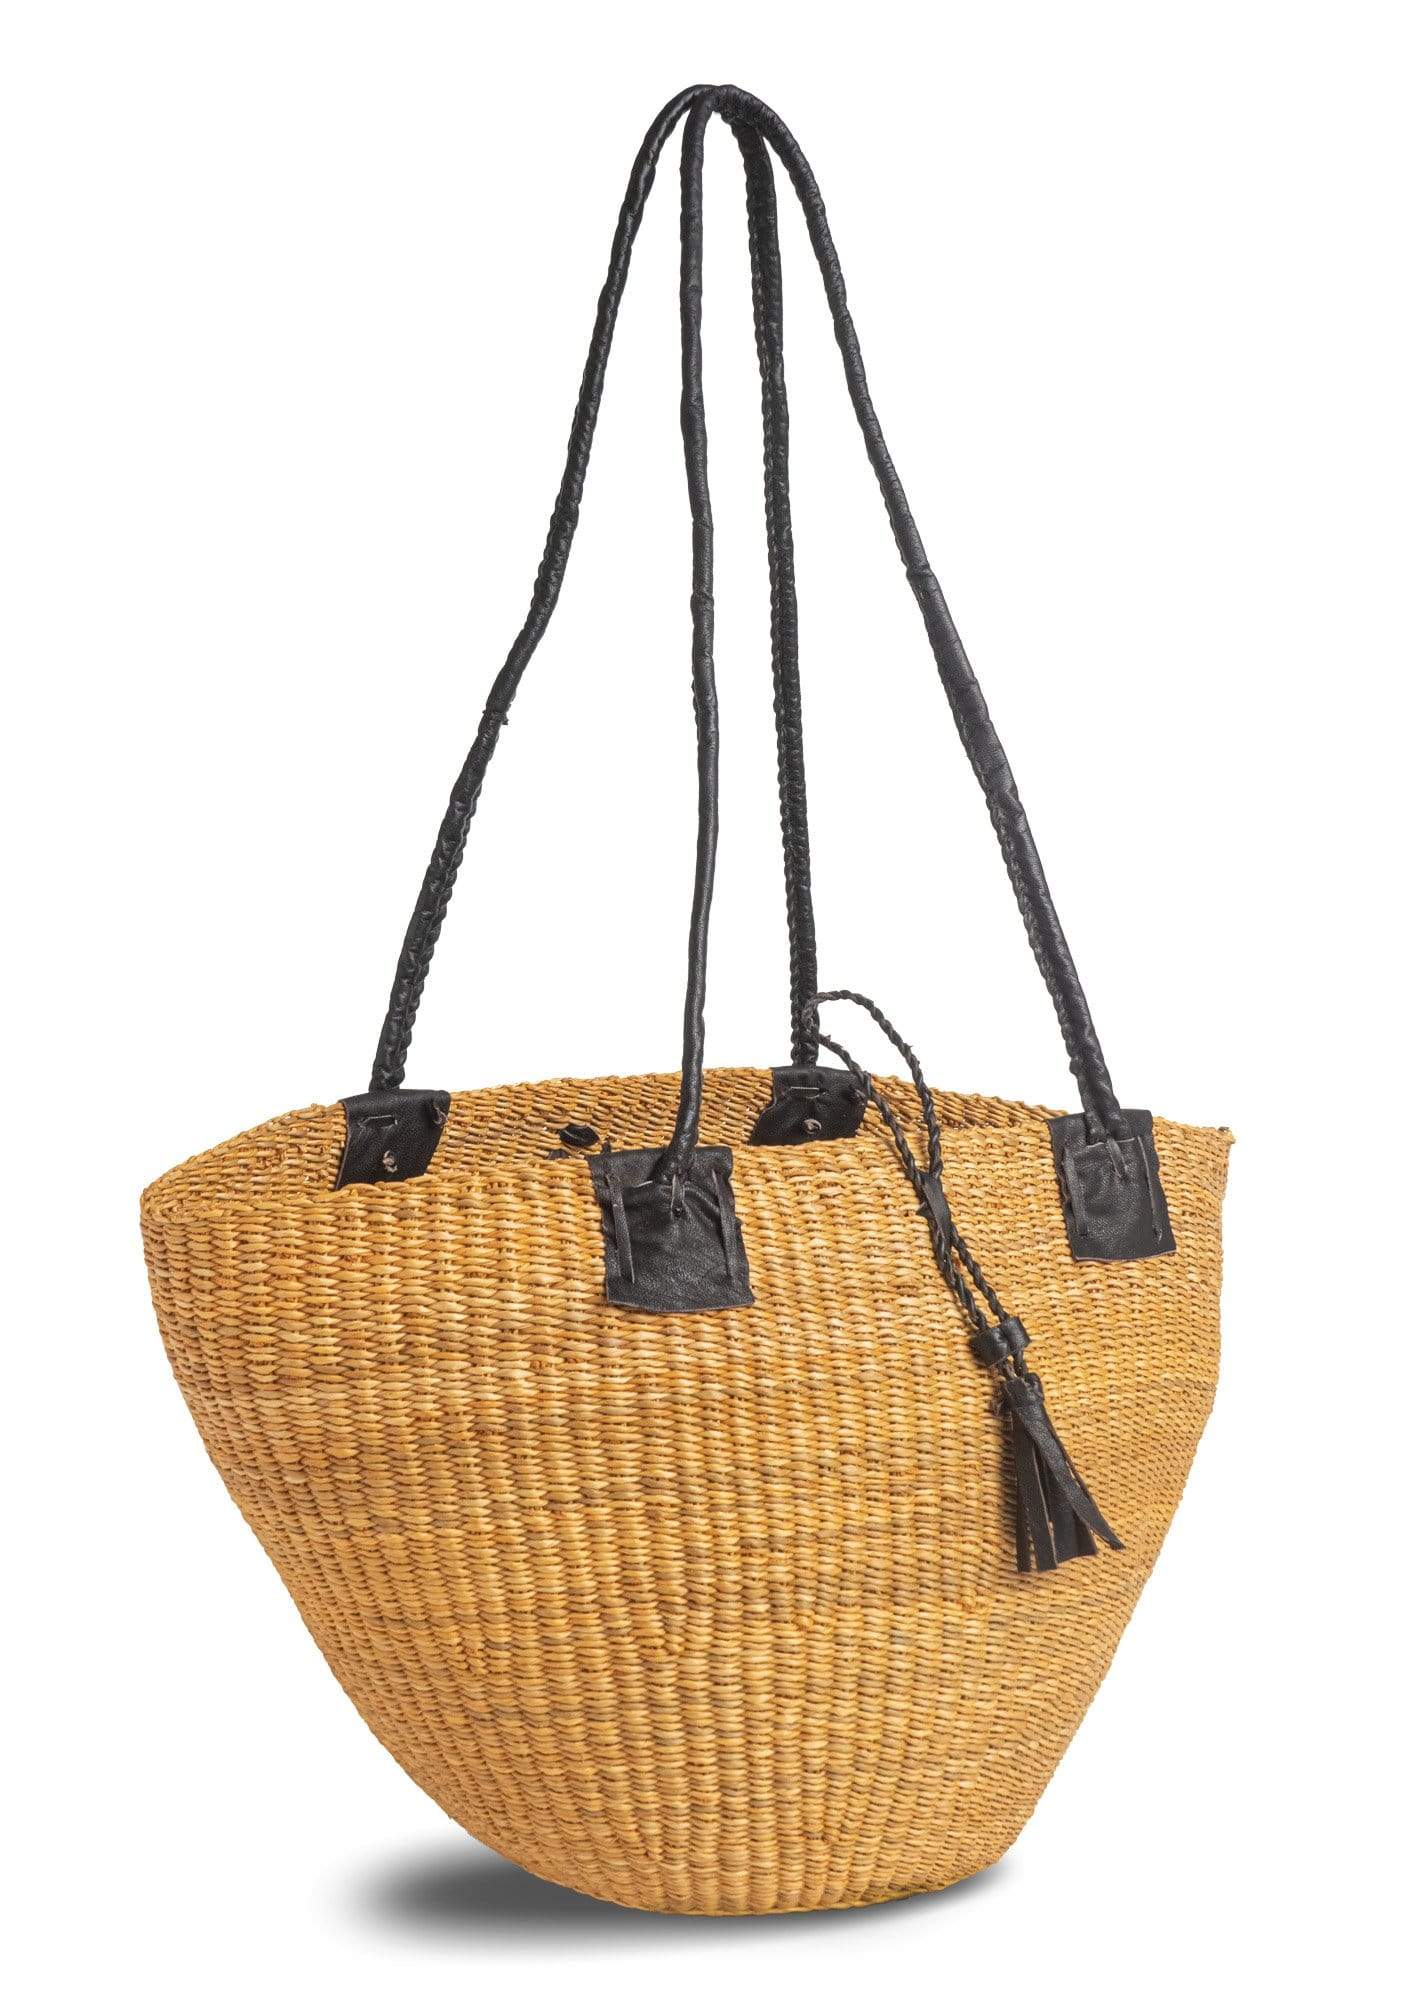 YEVU Accessories - Bag Orange Straw Bolga Handbag - Orange Straw